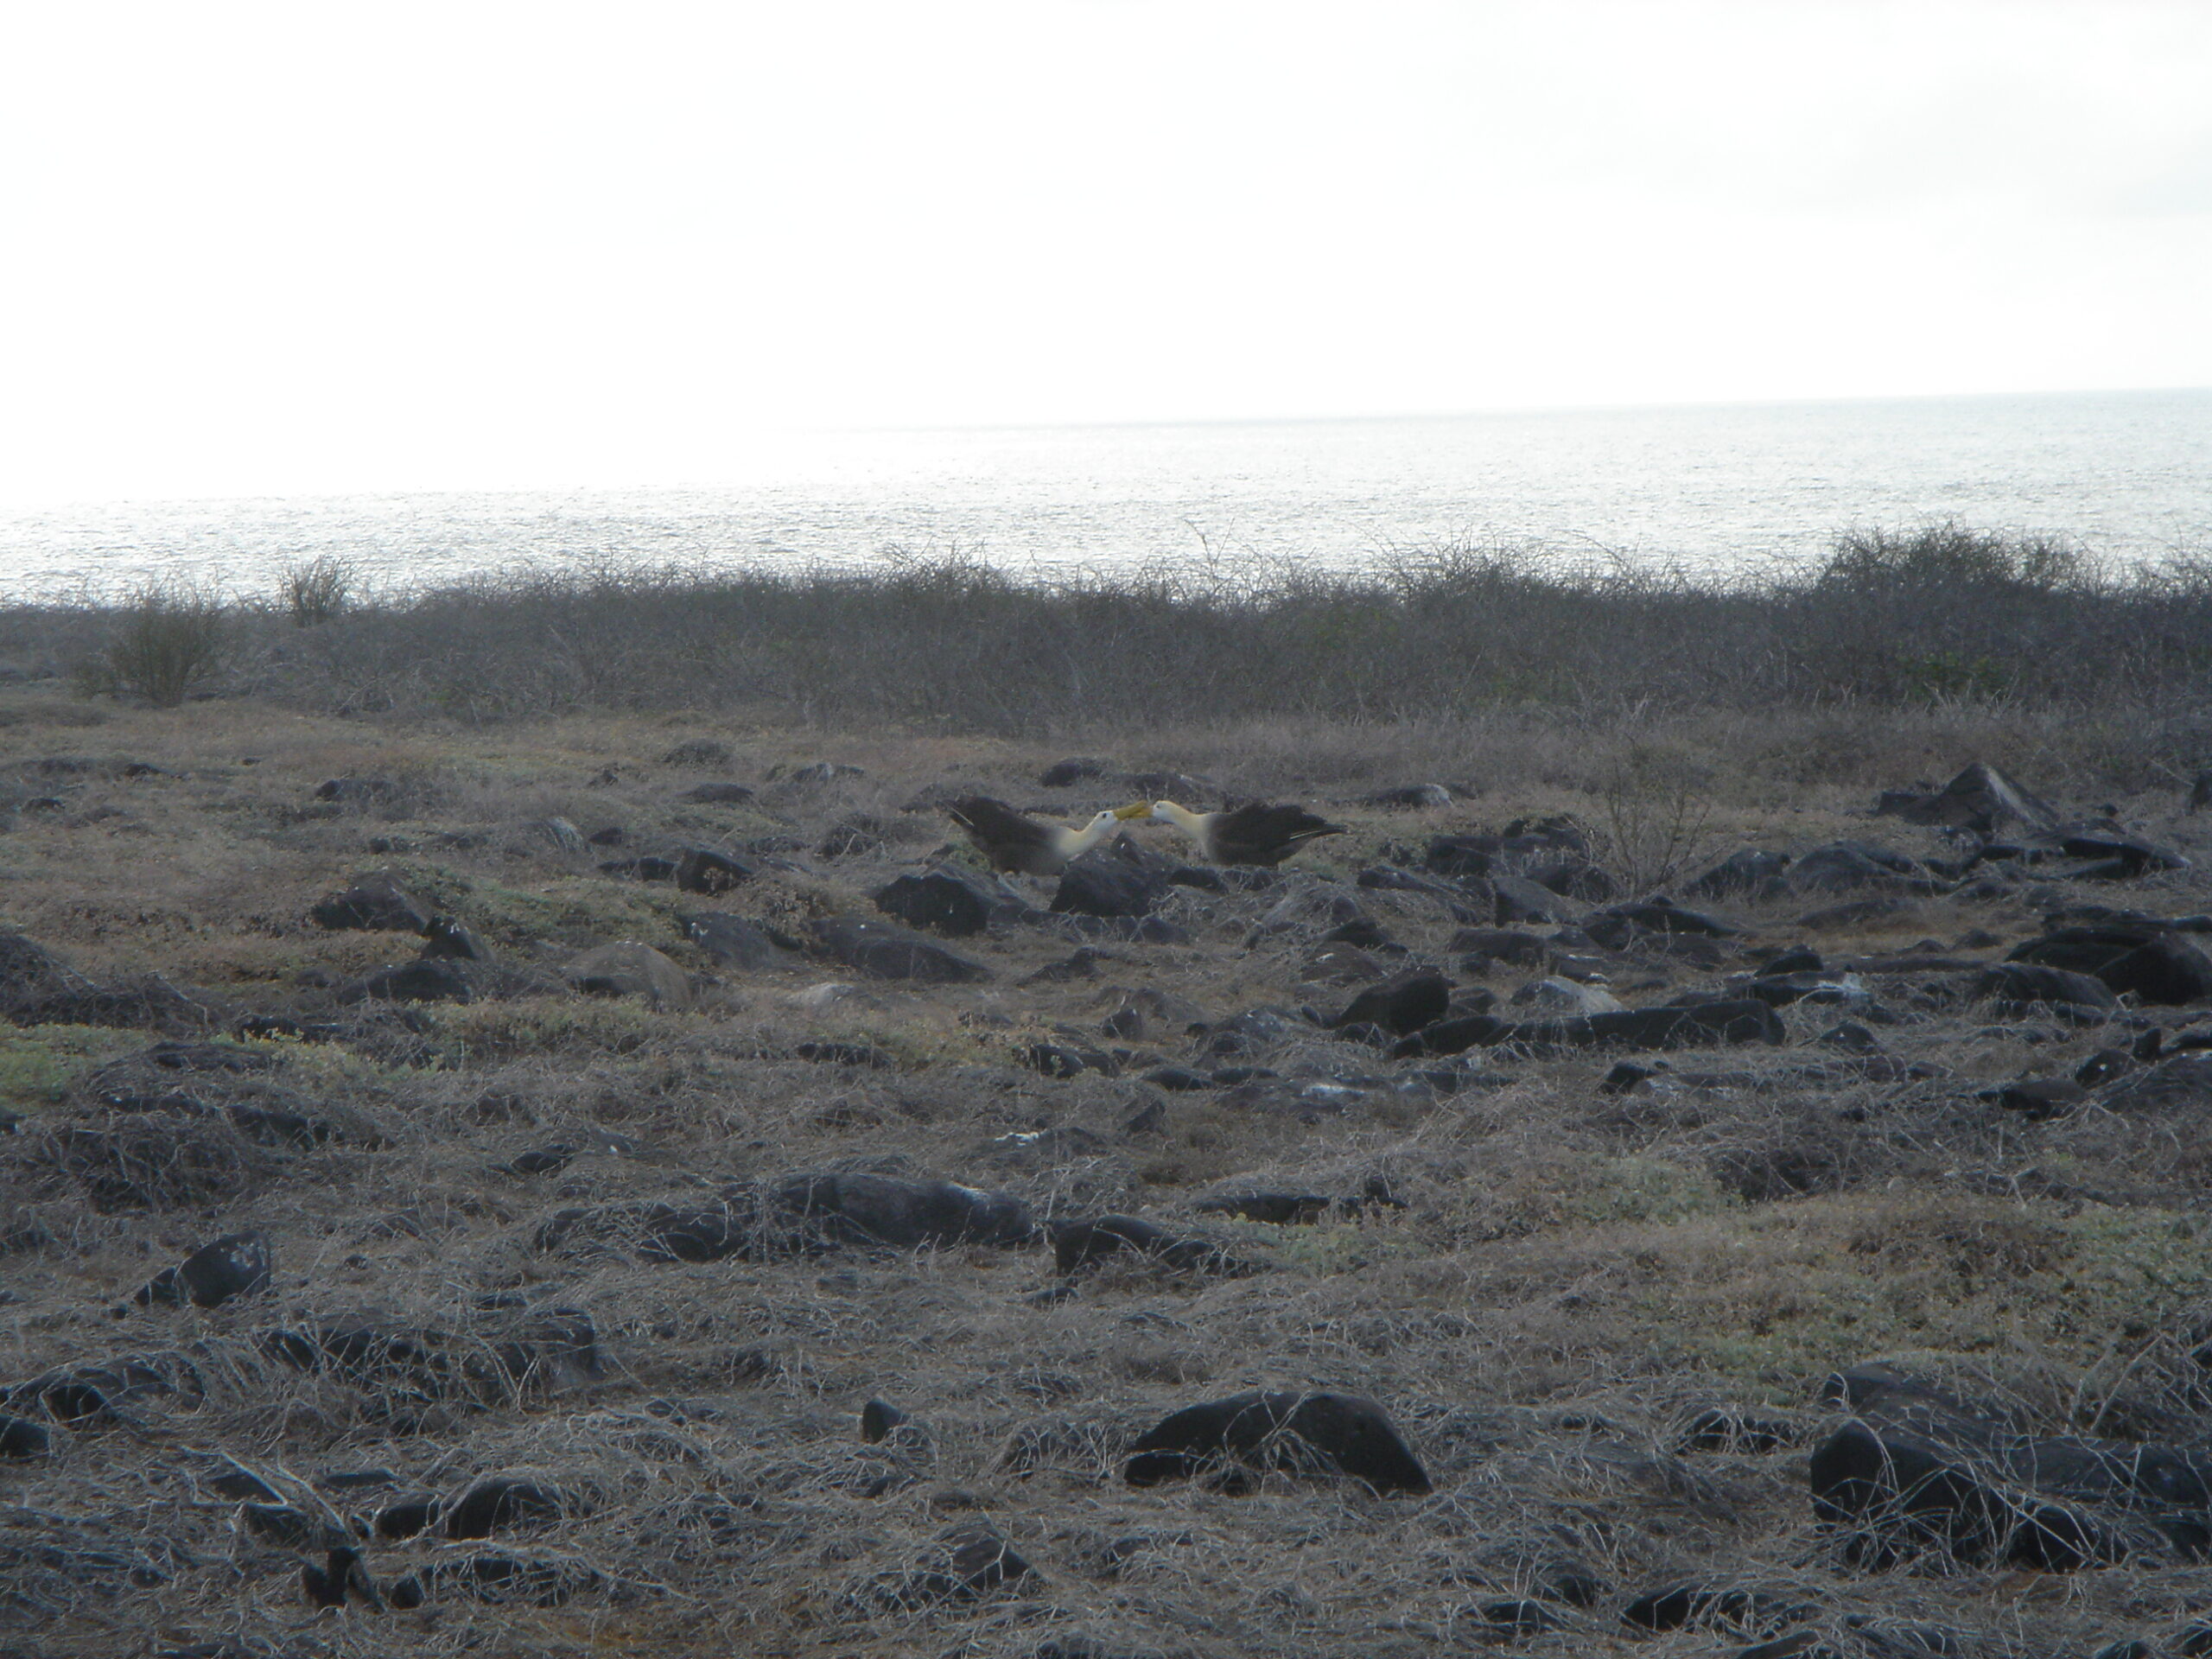 Albatrosses courting on Espanola Island 1